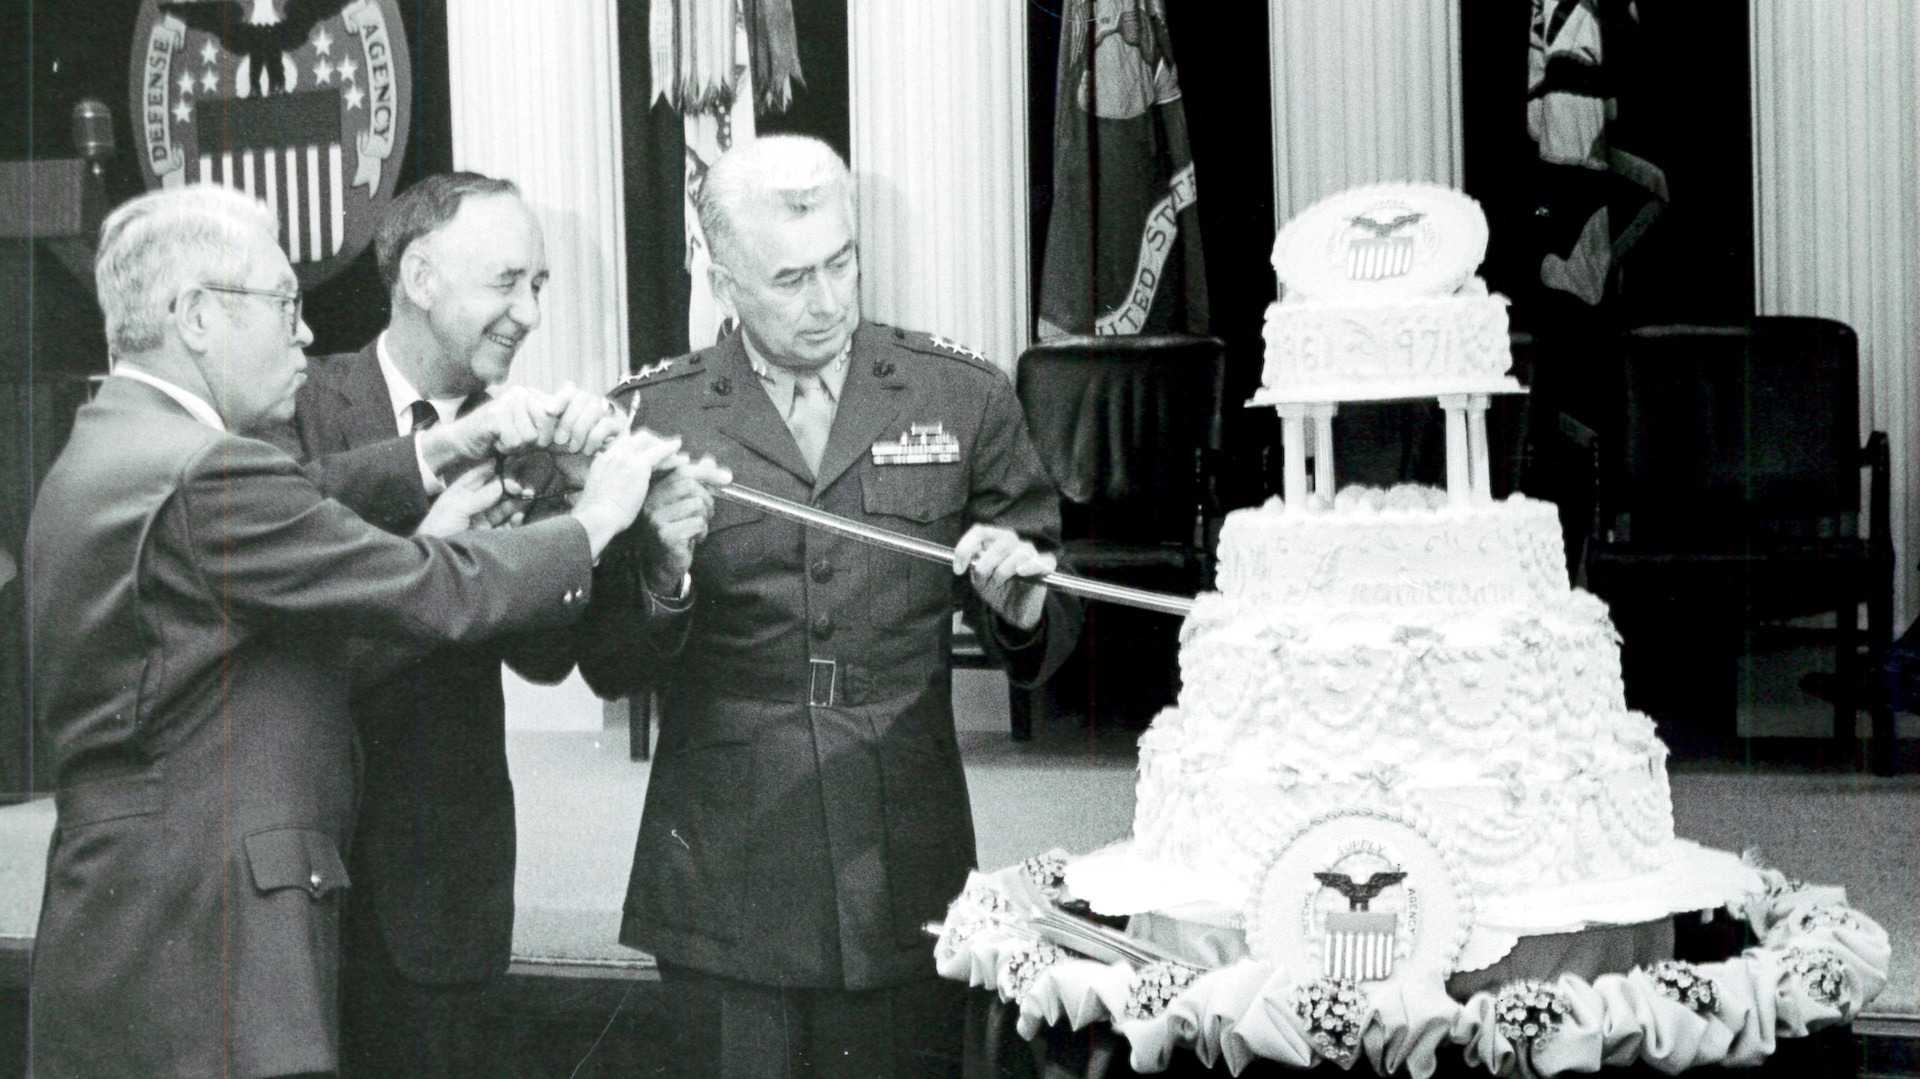 Three men use a sword to cut a cake.